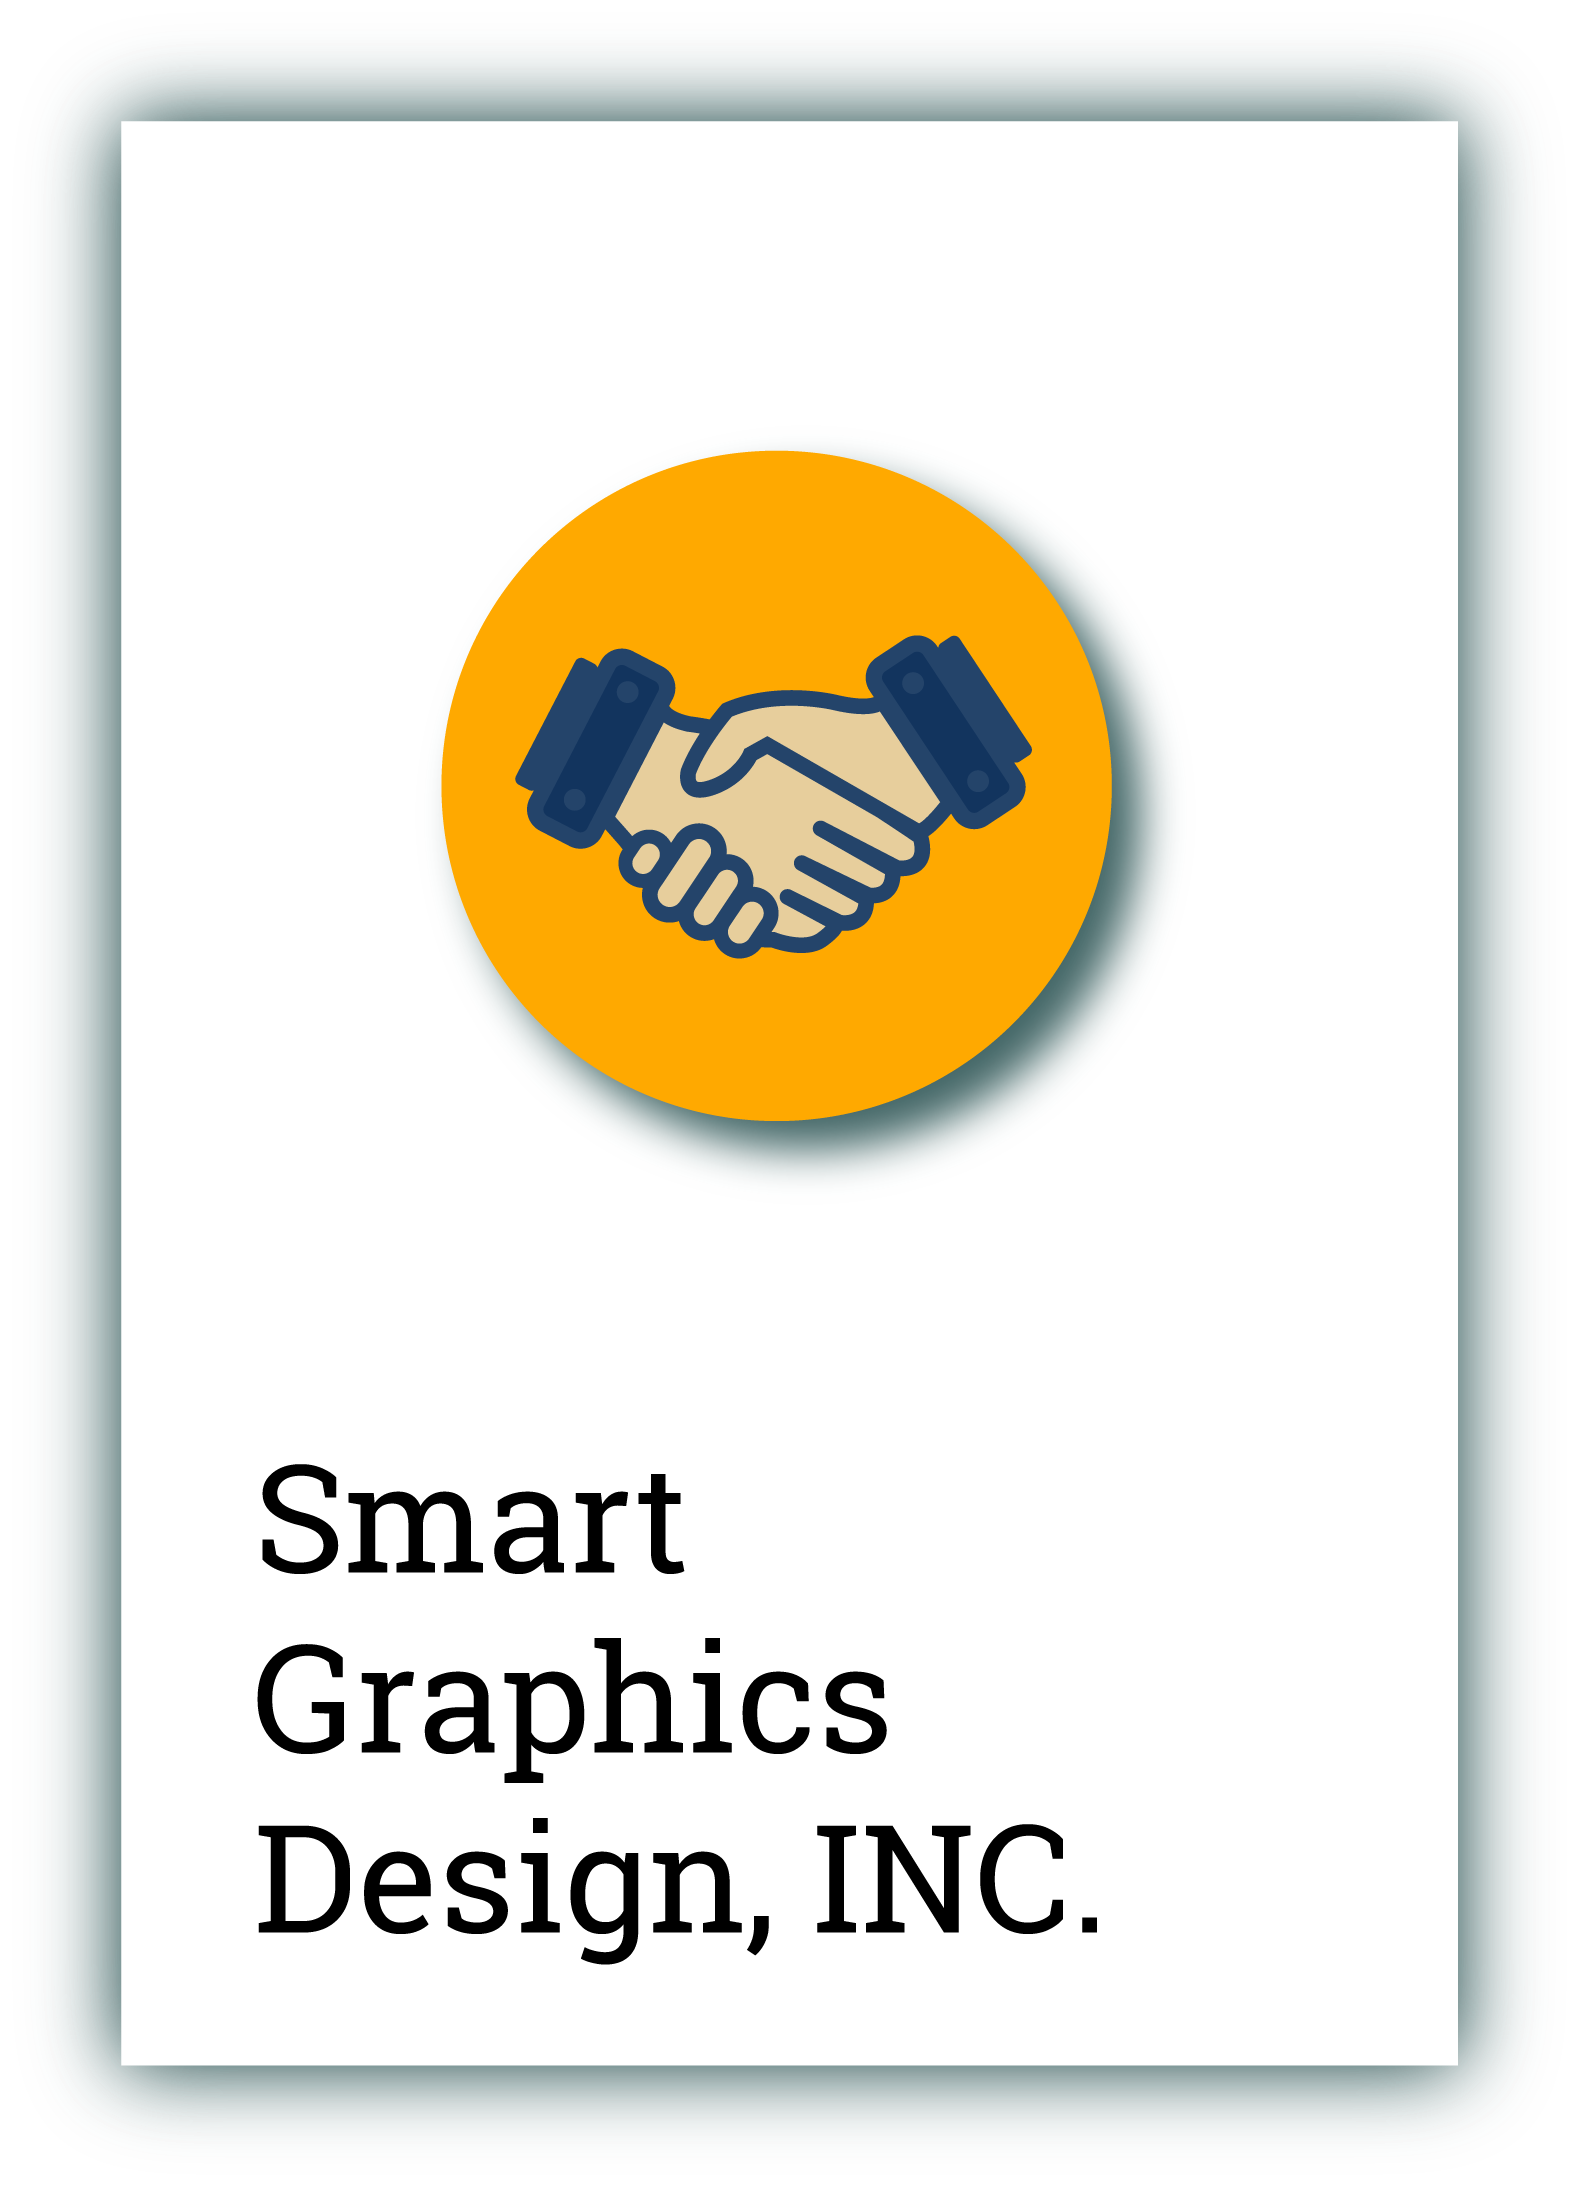 Smart Graphics Design, INC, Professional Services